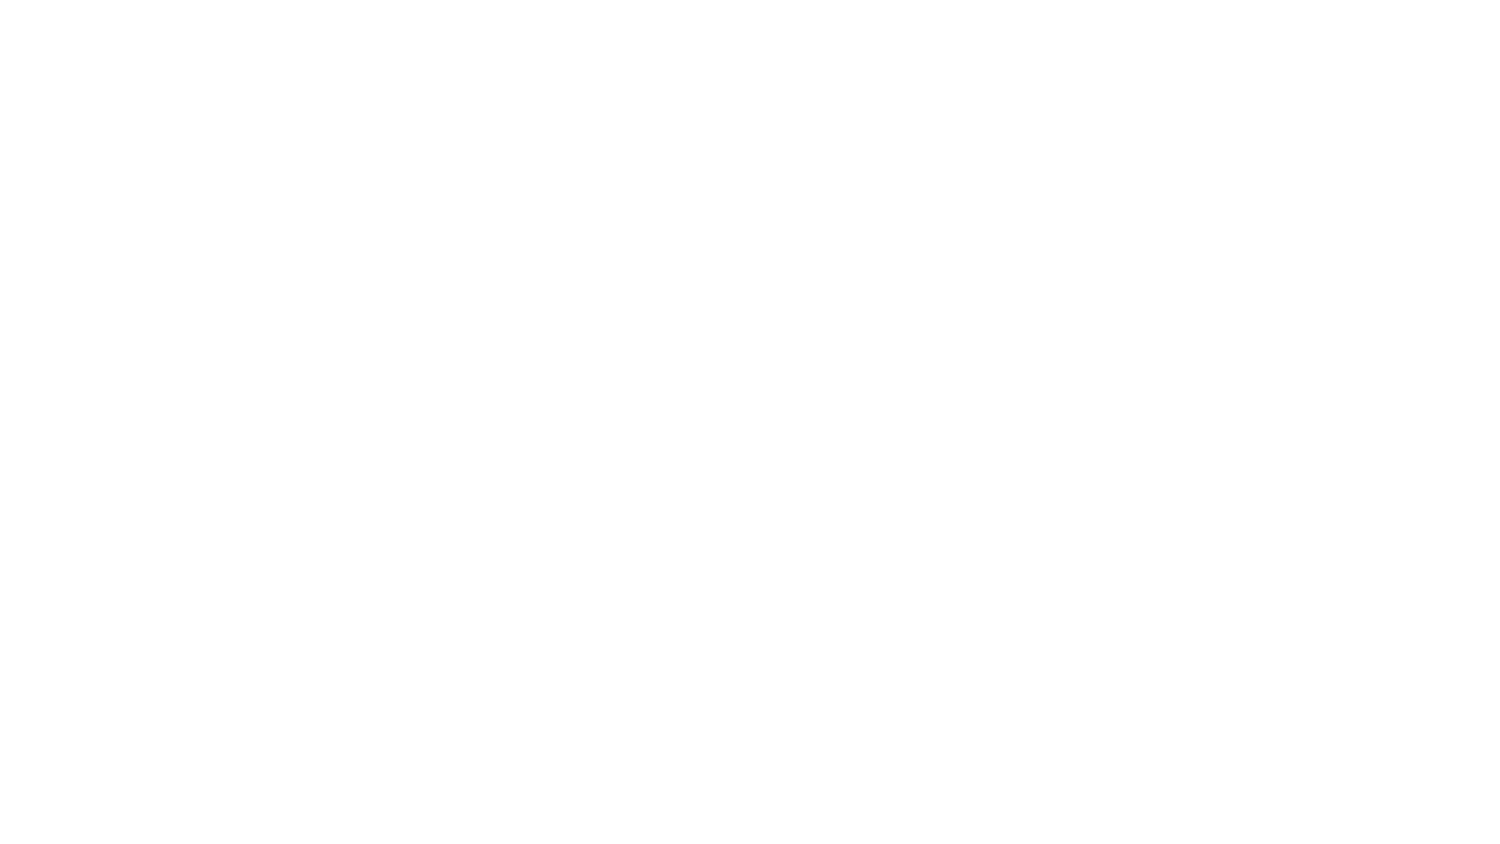 Slim Collins